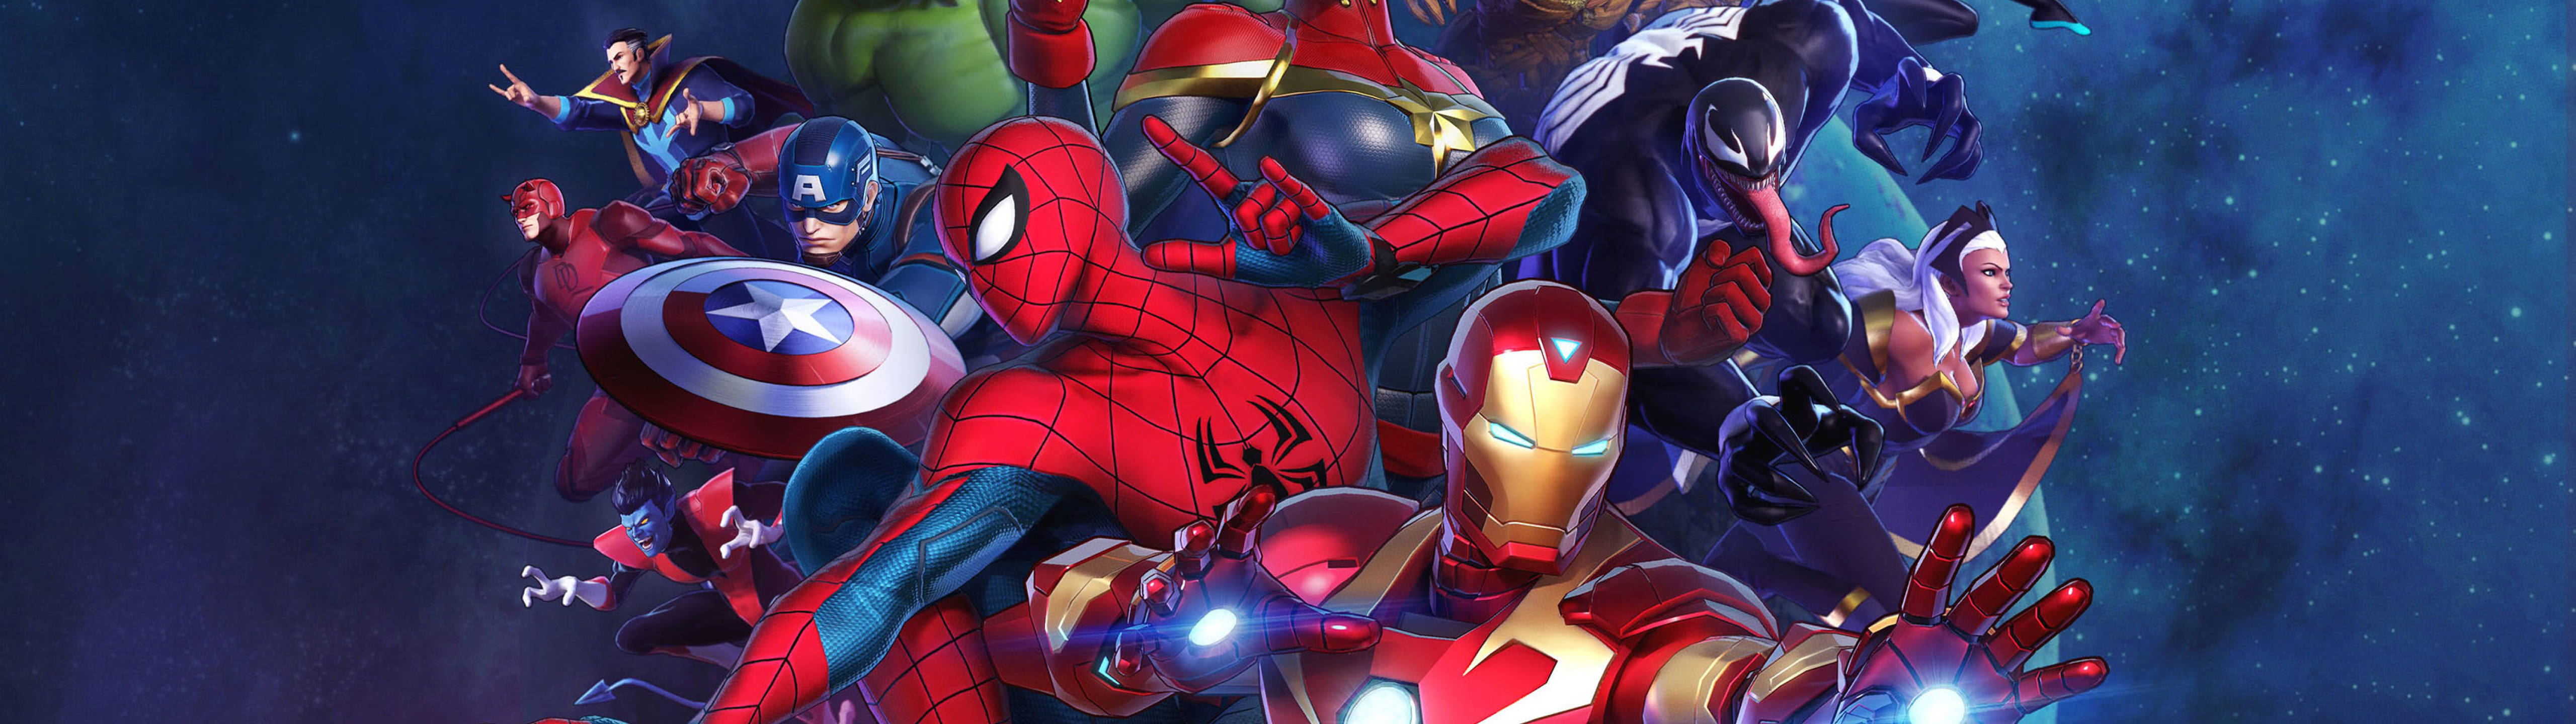 Marvel Heroes Animated 5120 X 1440